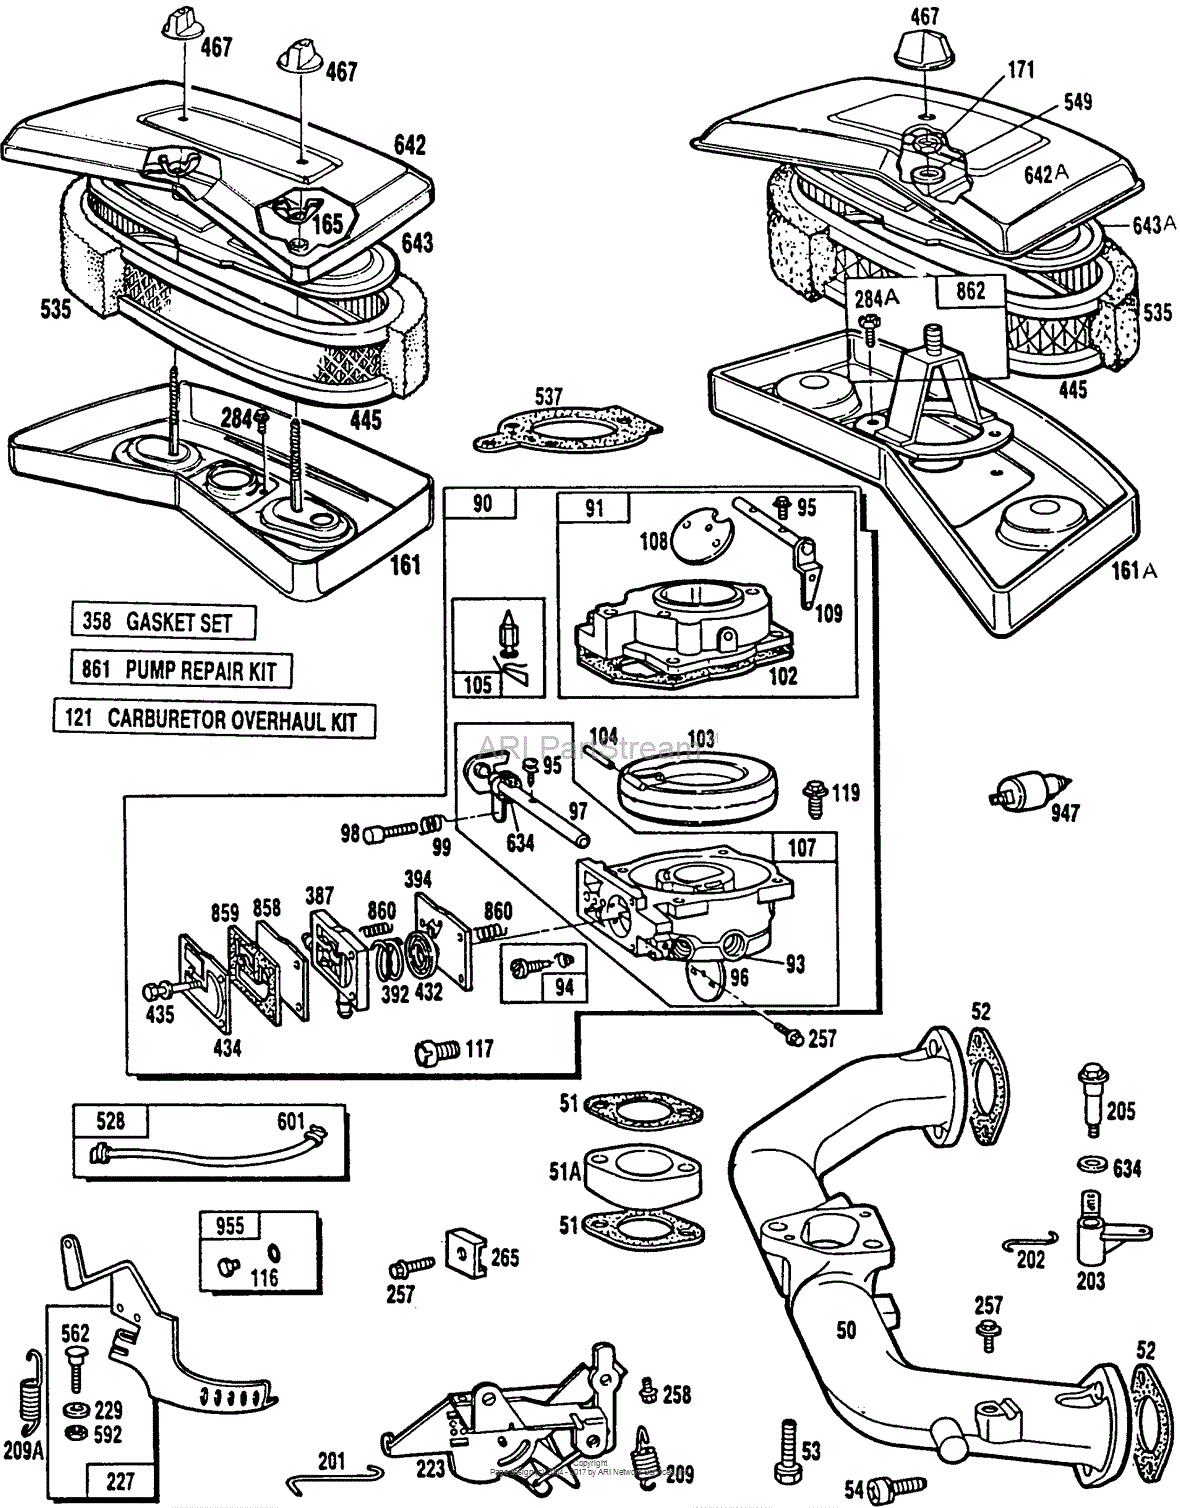 Briggs And Stratton Carburetor Linkage Diagram 82